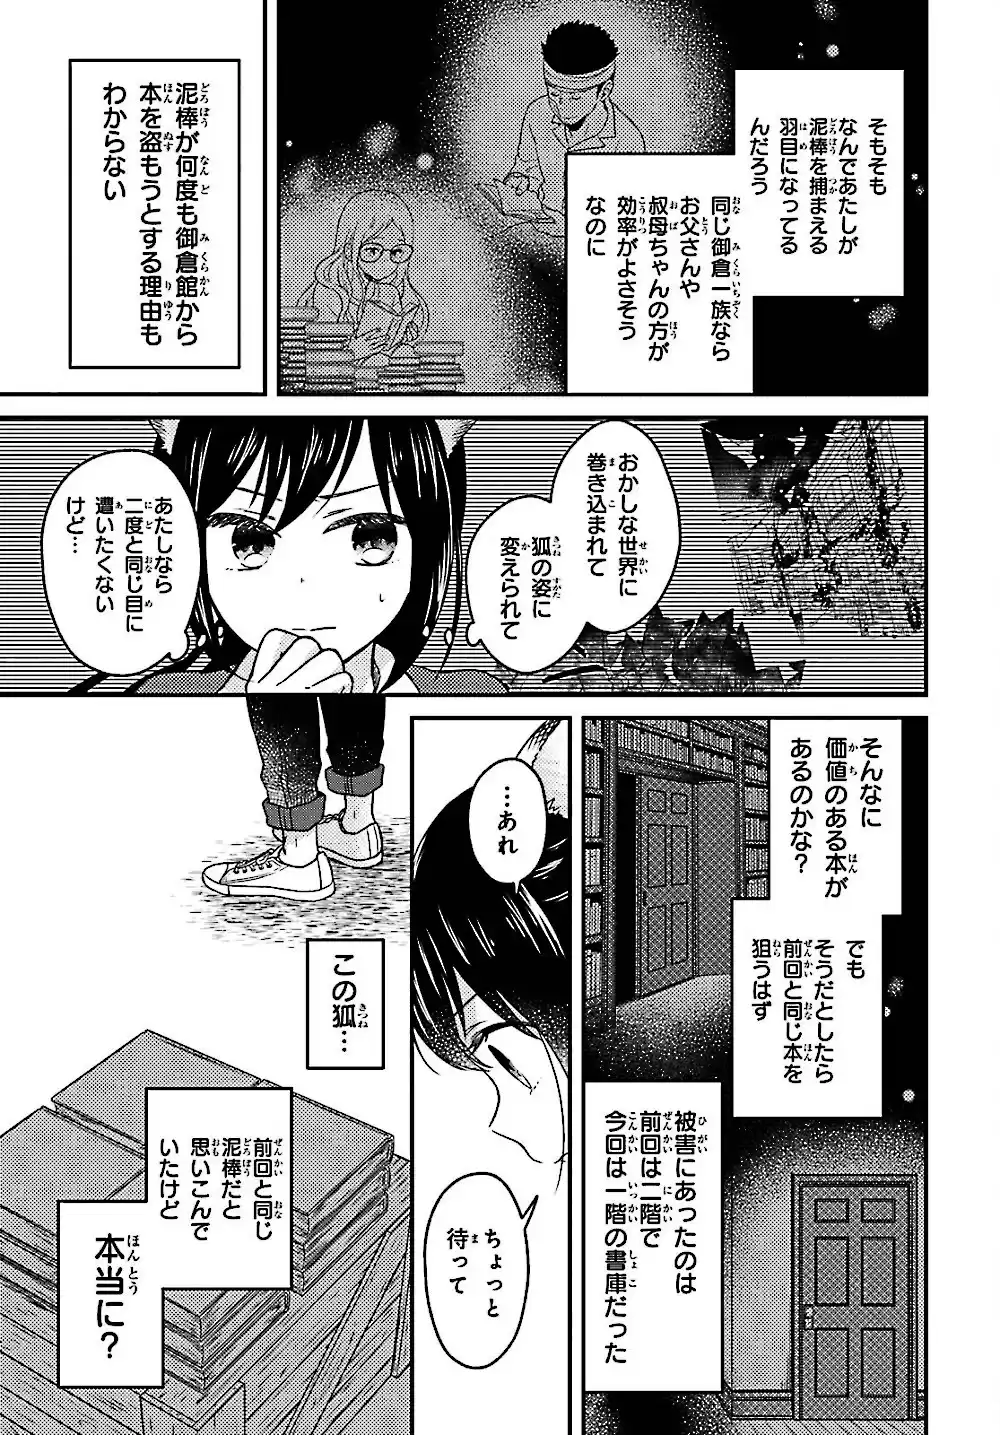 16 Manga E6is